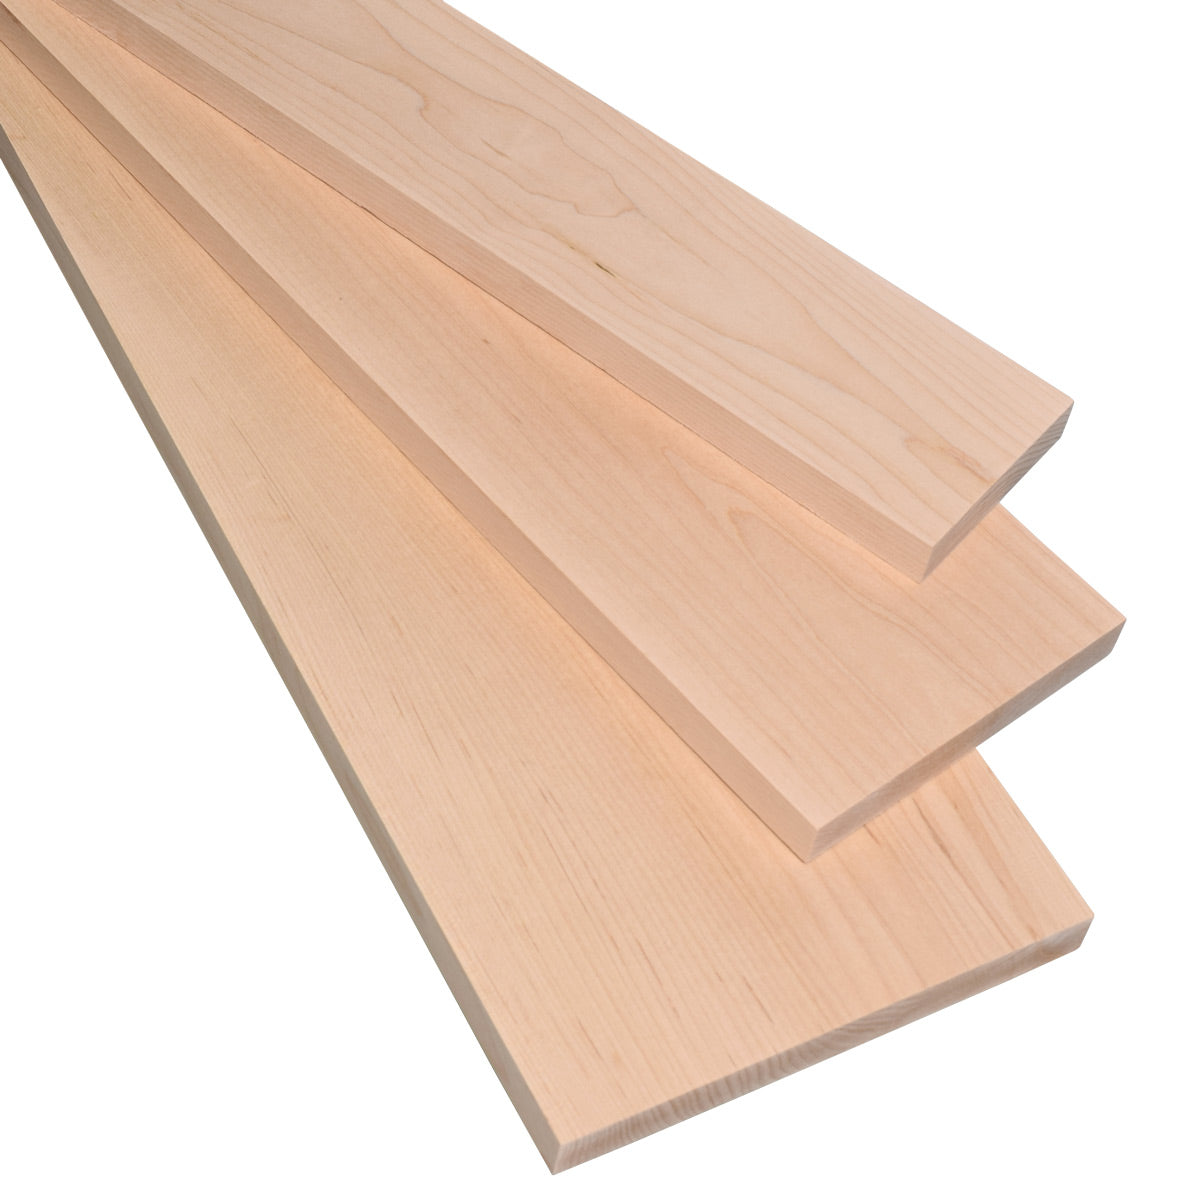 6/4 Hard Maple Lumber